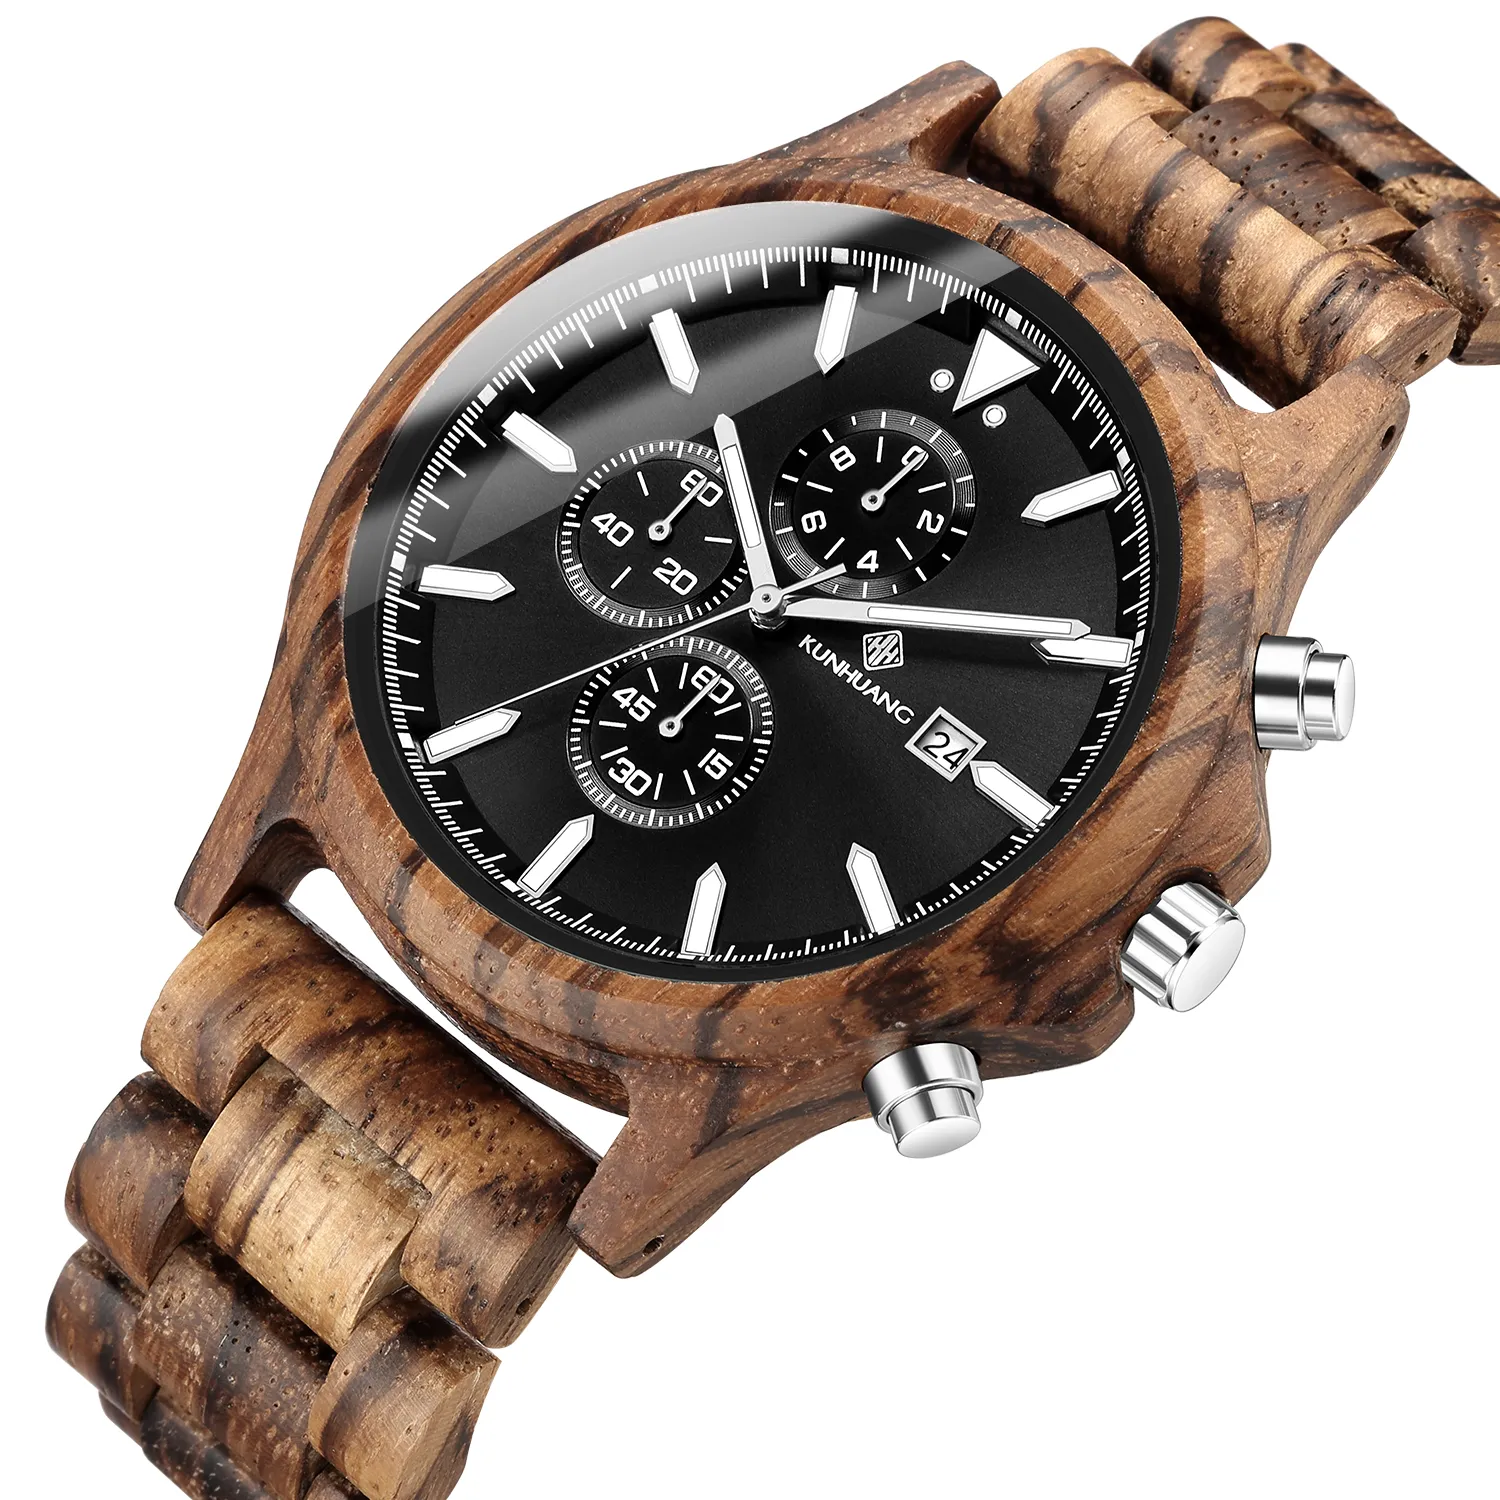 Hommes Wood Watch Chronograph Luxury Military Sport Watches Eleby Casual personnalisée en bois personnalisé Watches 278b